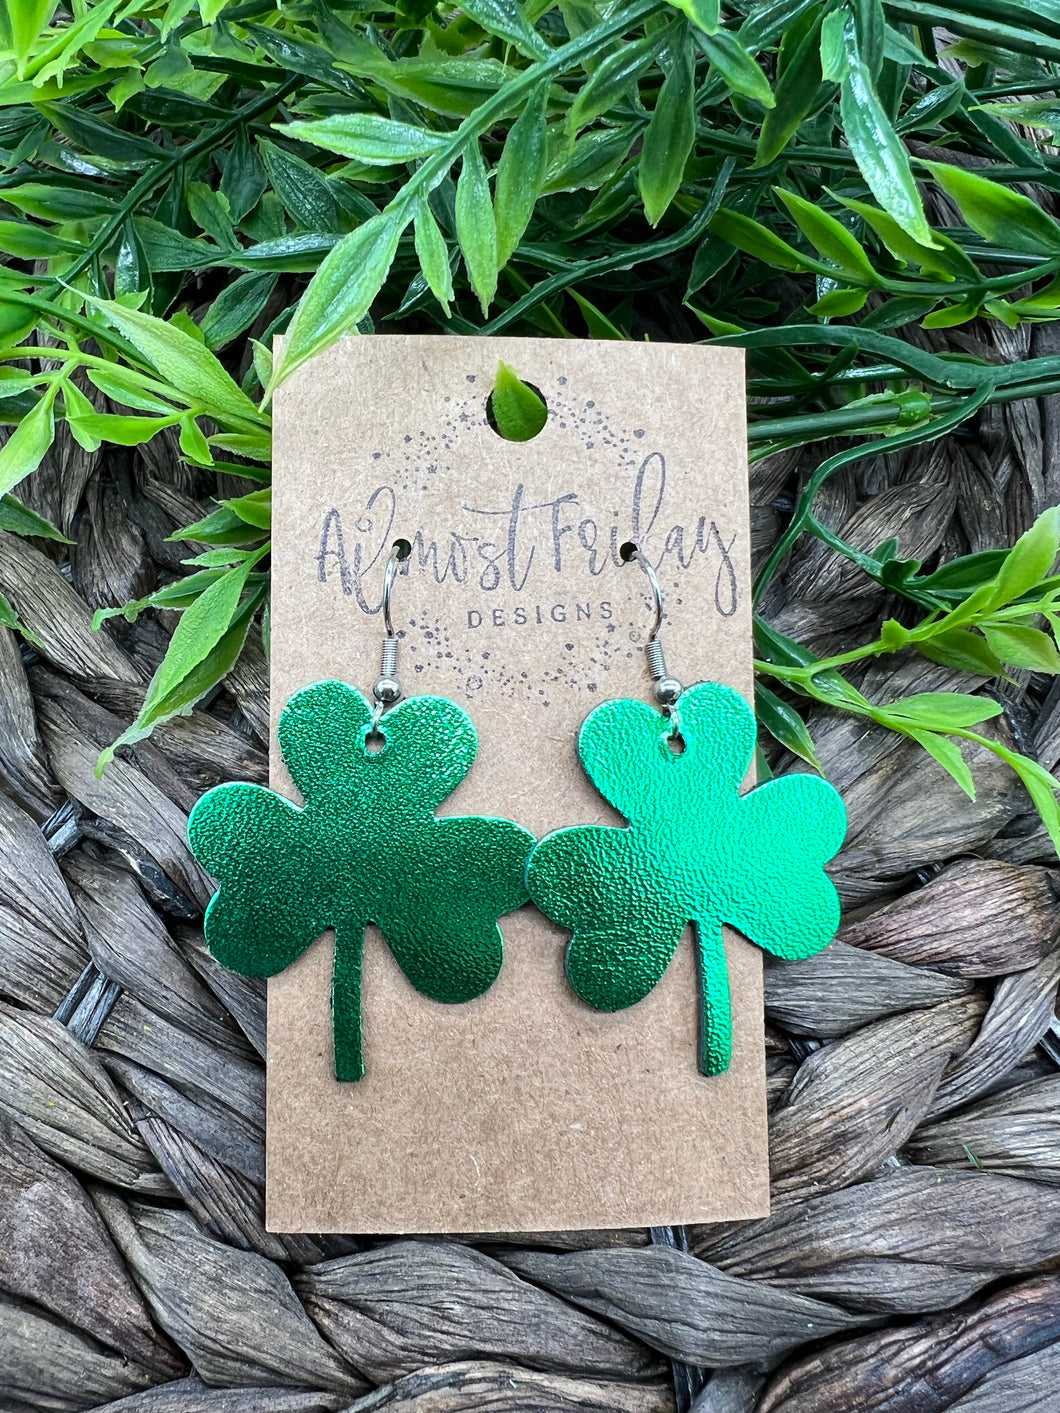 Genuine Leather Earrings - Saint Patrick's Day - Green Earrings - Three Leaf Clovers - Metallic Green - Metallic Leather - Clovers - Shamrocks - Statement Earrings